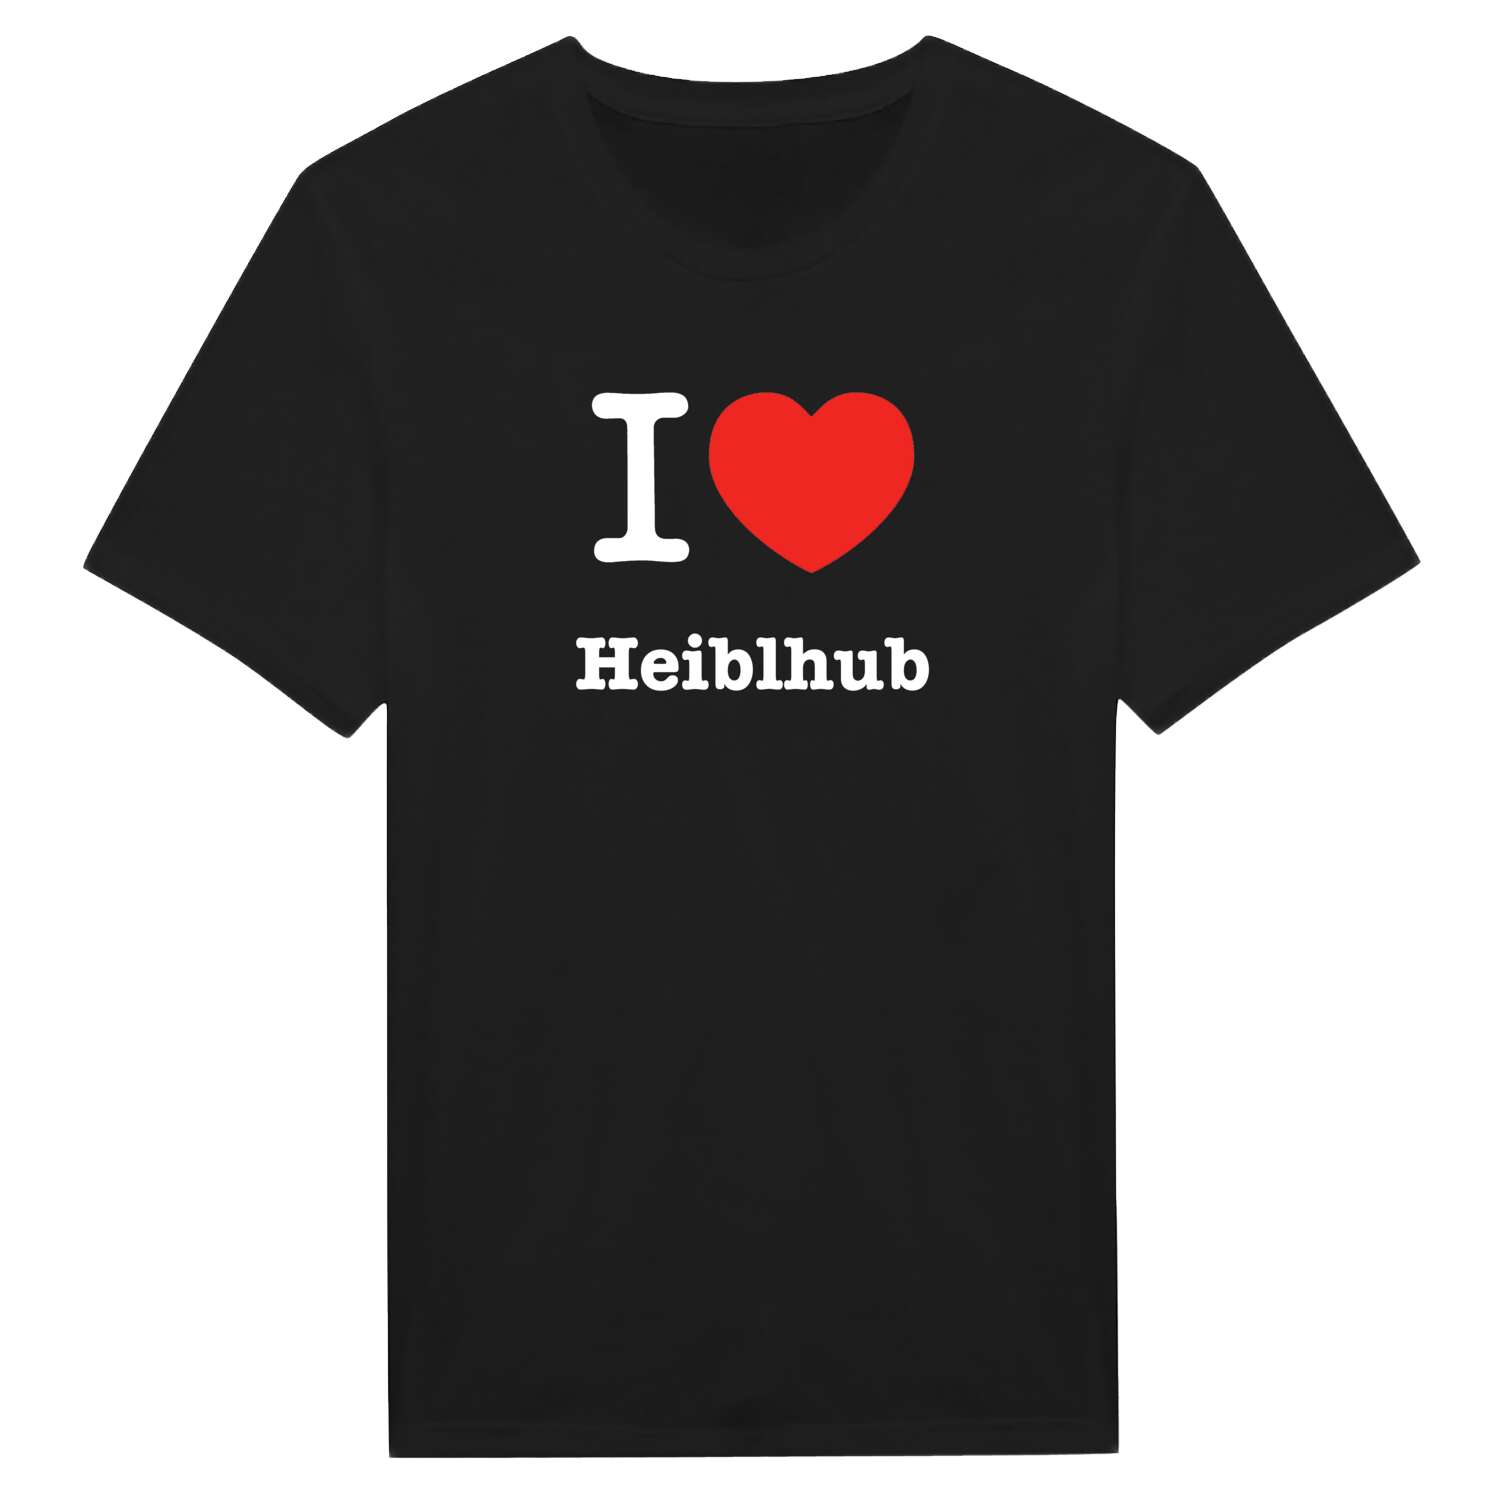 Heiblhub T-Shirt »I love«